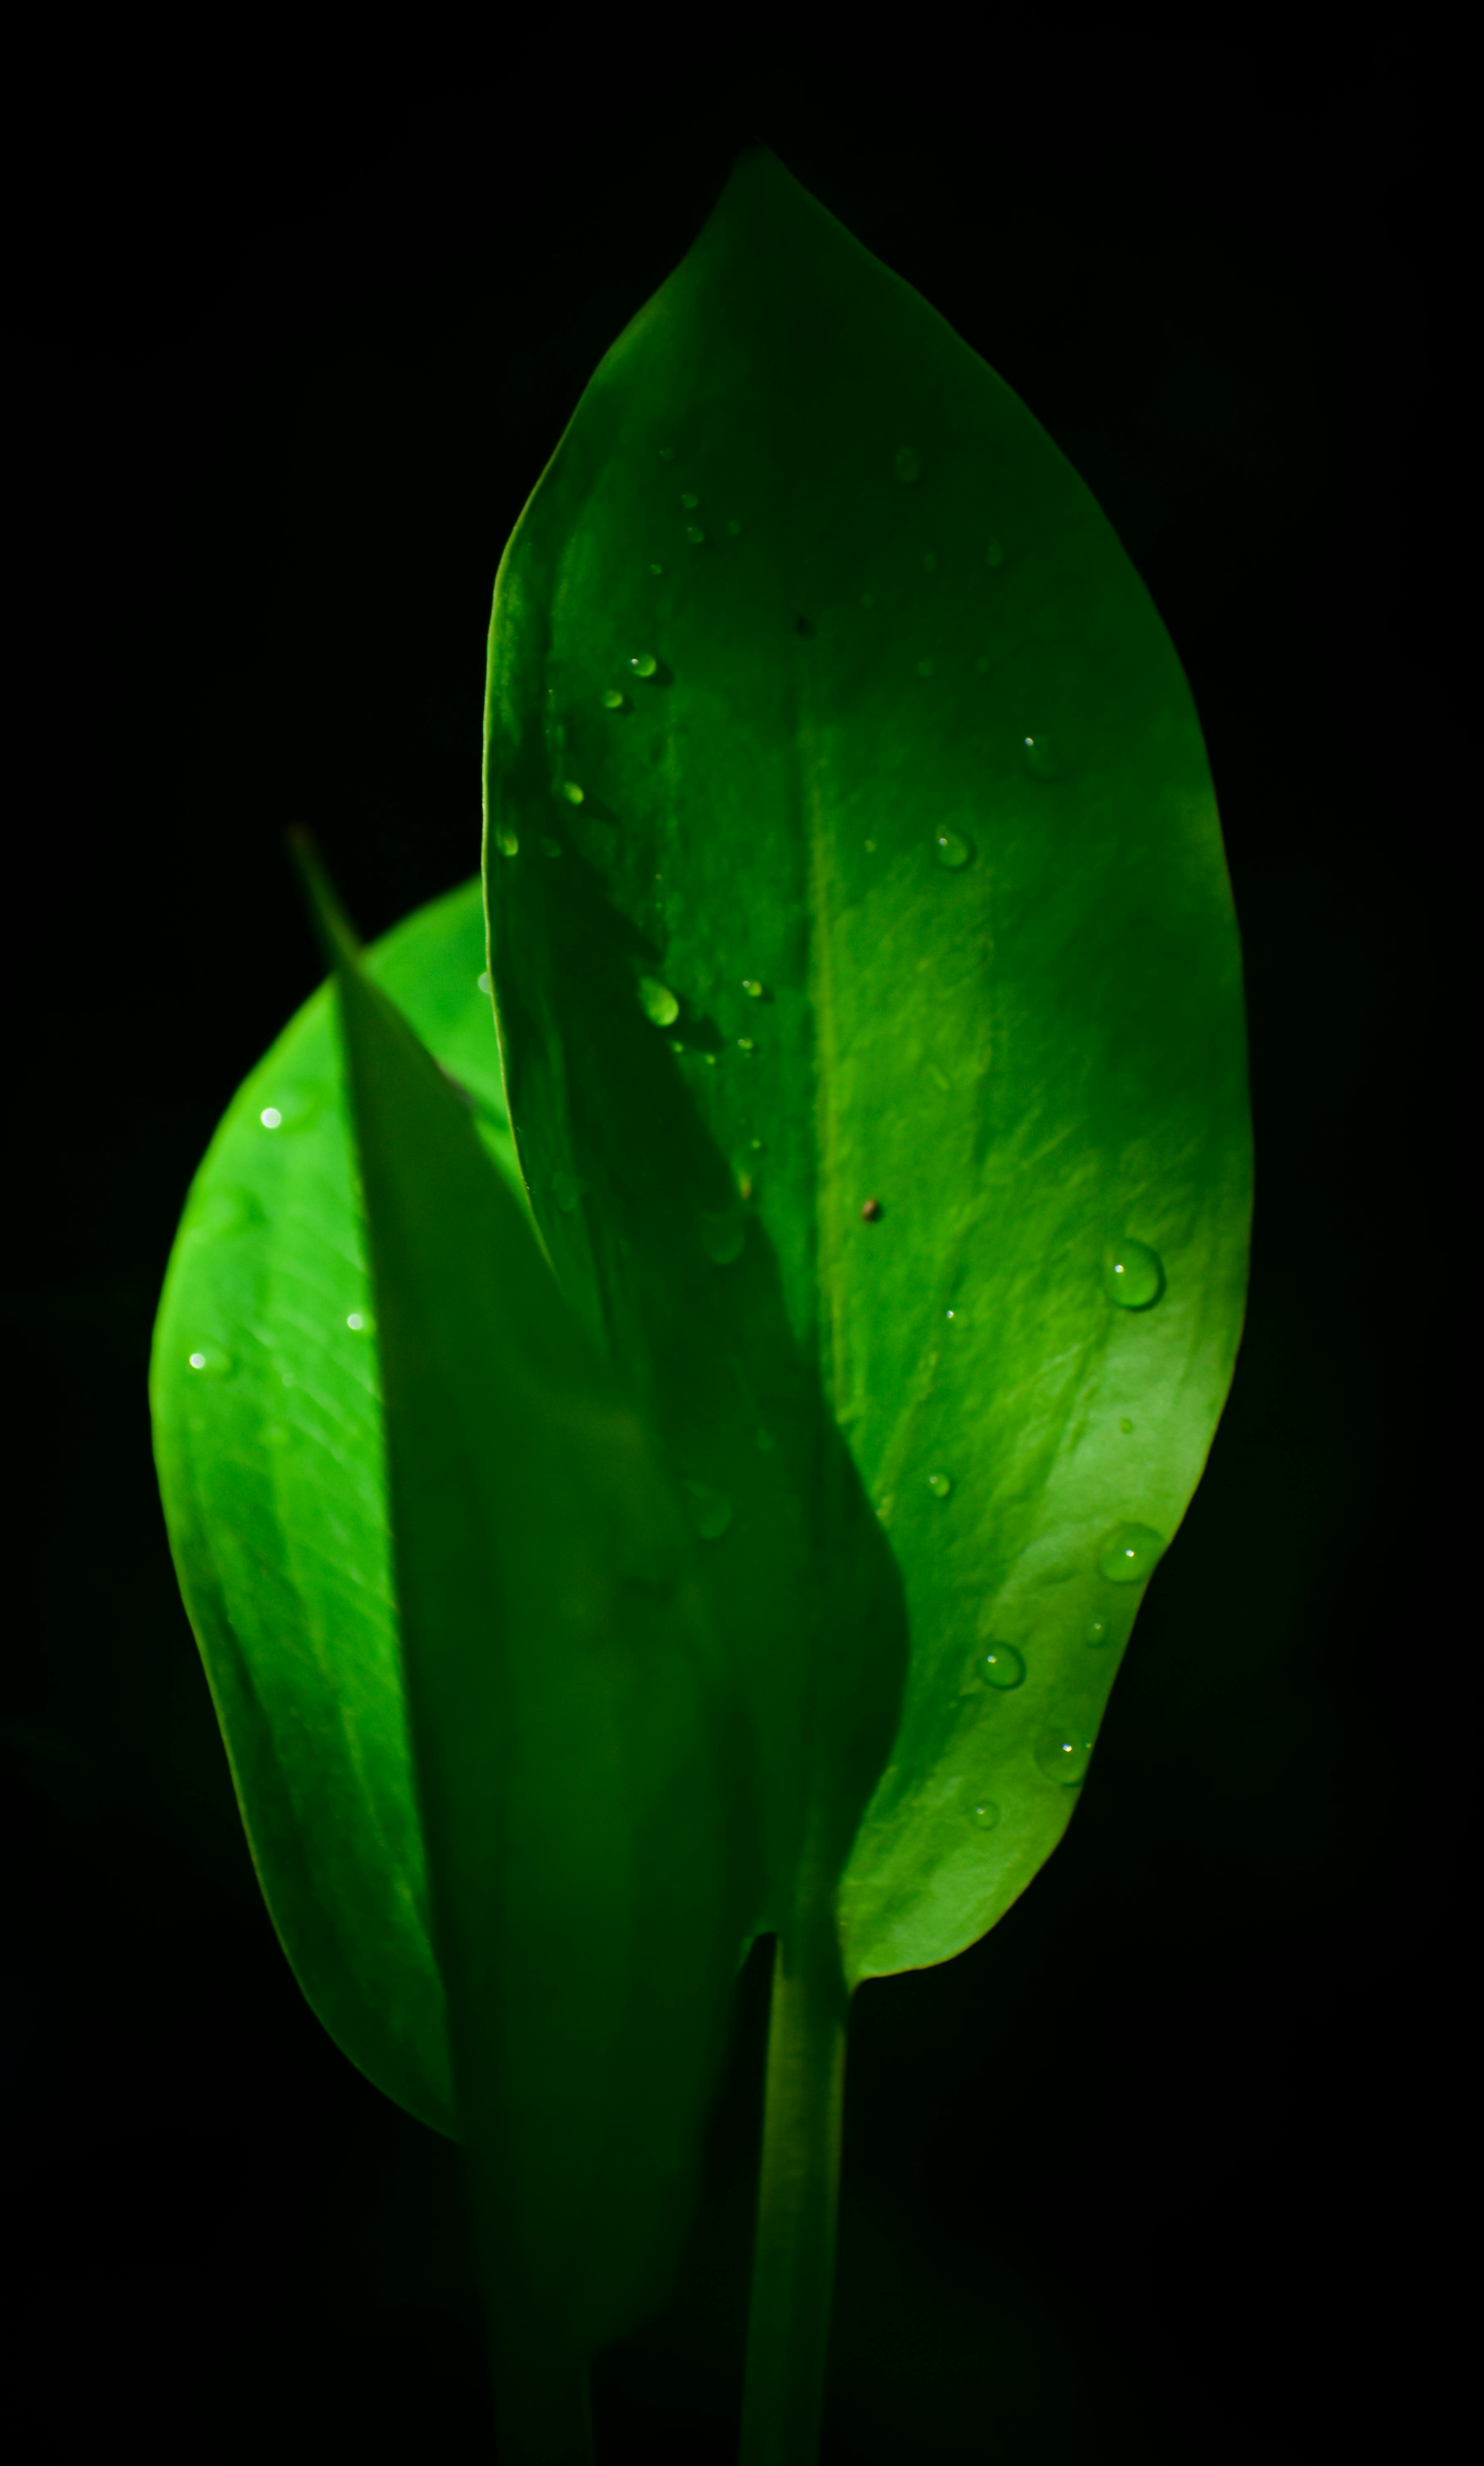 Lush green plant leaves on black background · Free Stock Photo